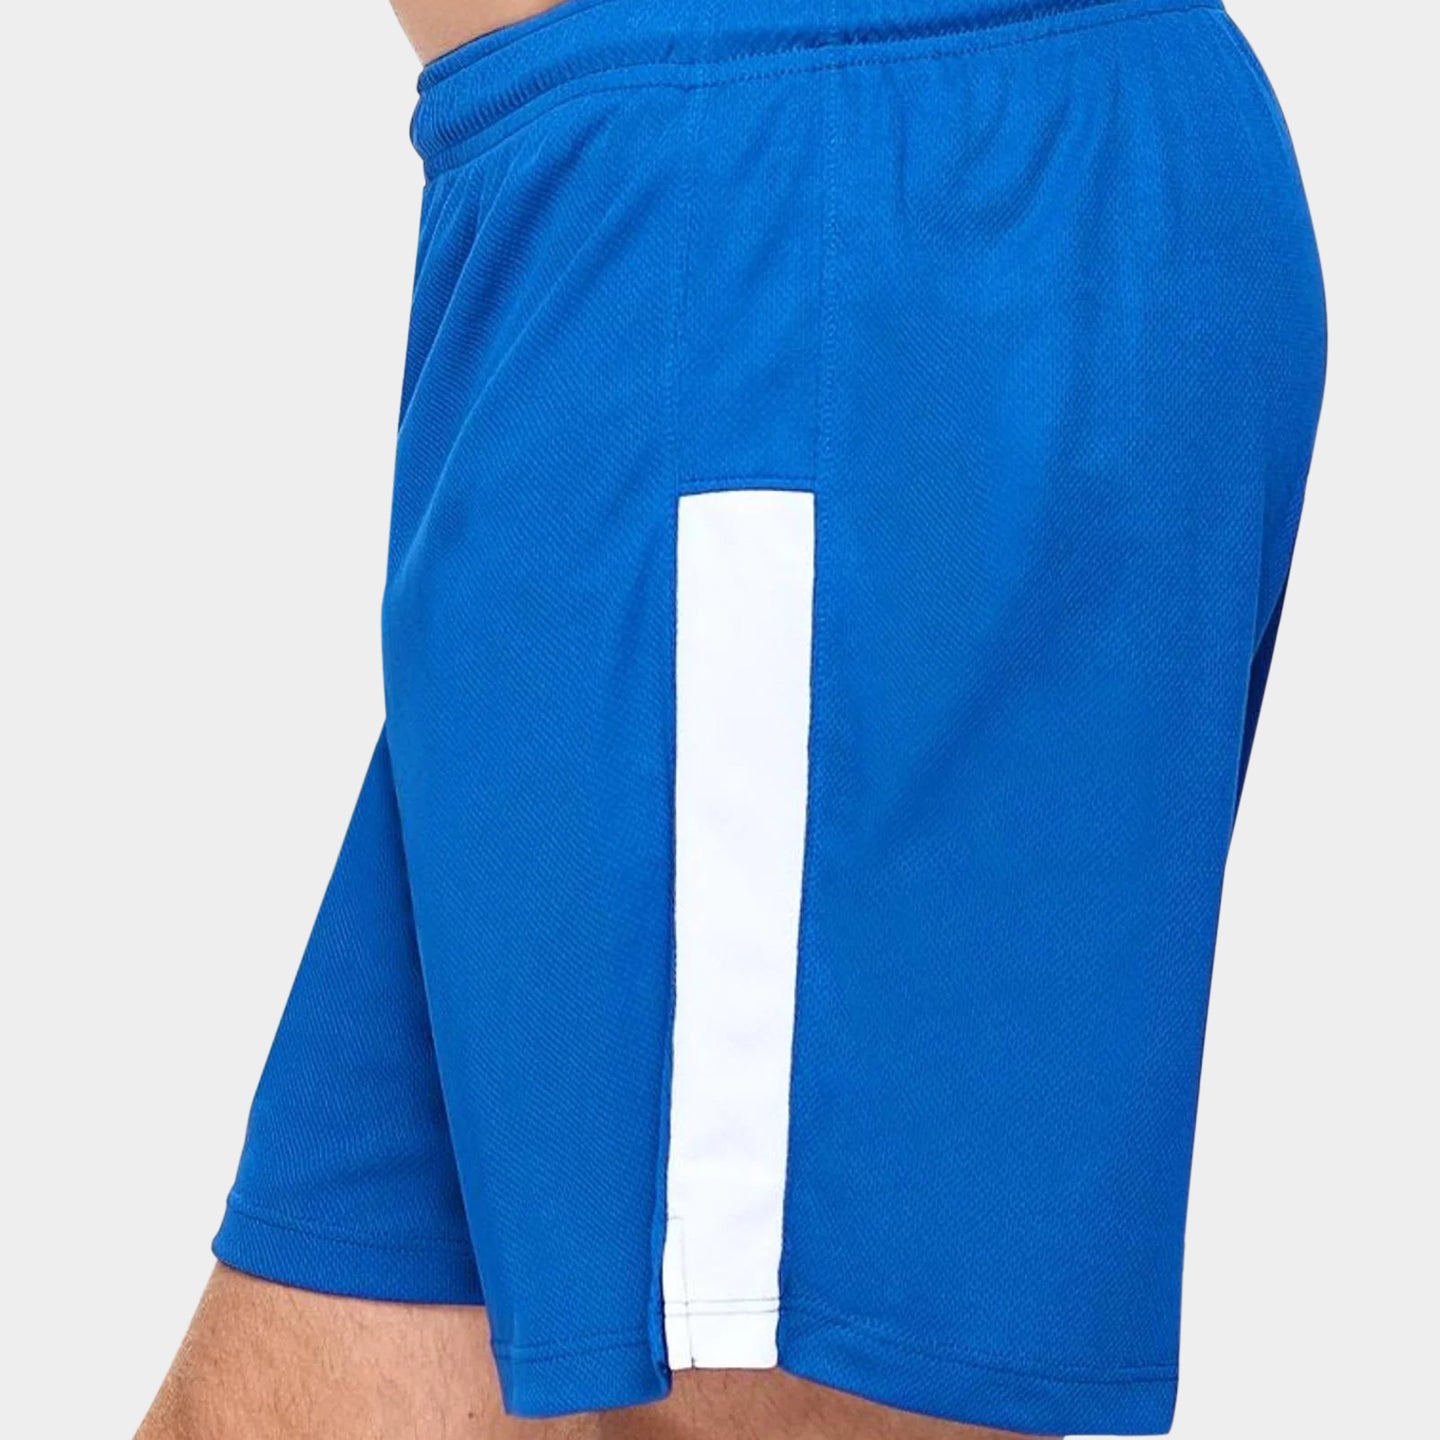 Expert Brand Oxymesh Men's Premium Active Training Shorts, L, Royal Blue A1